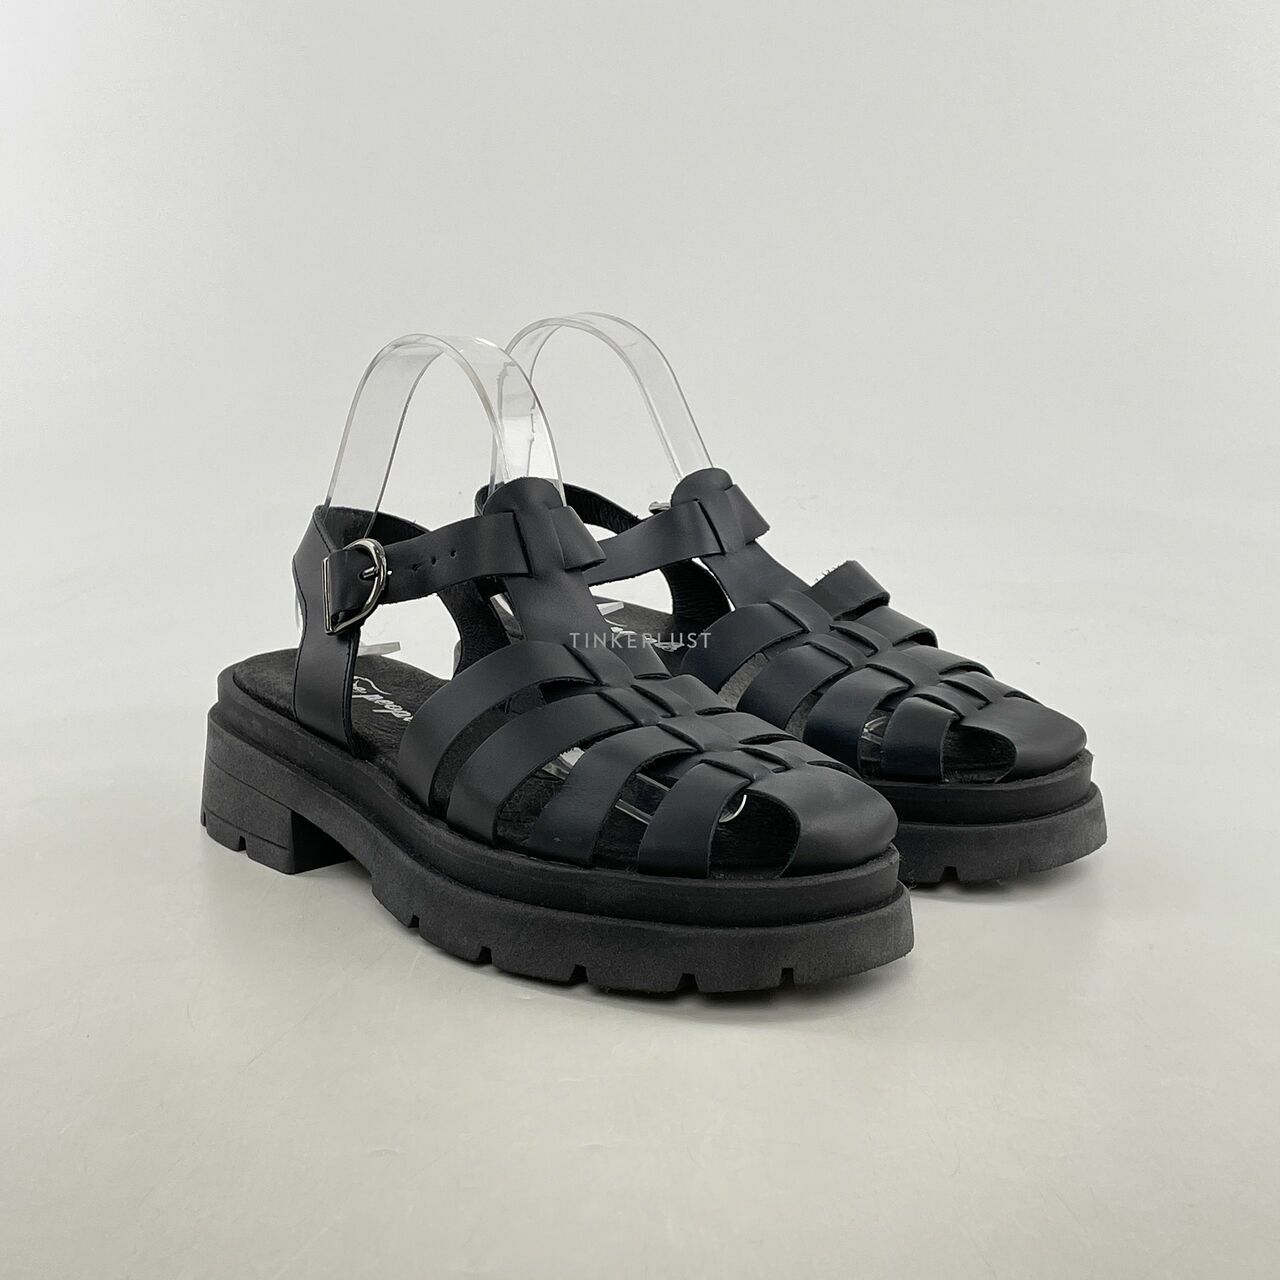 Free People Black Platform Sandals